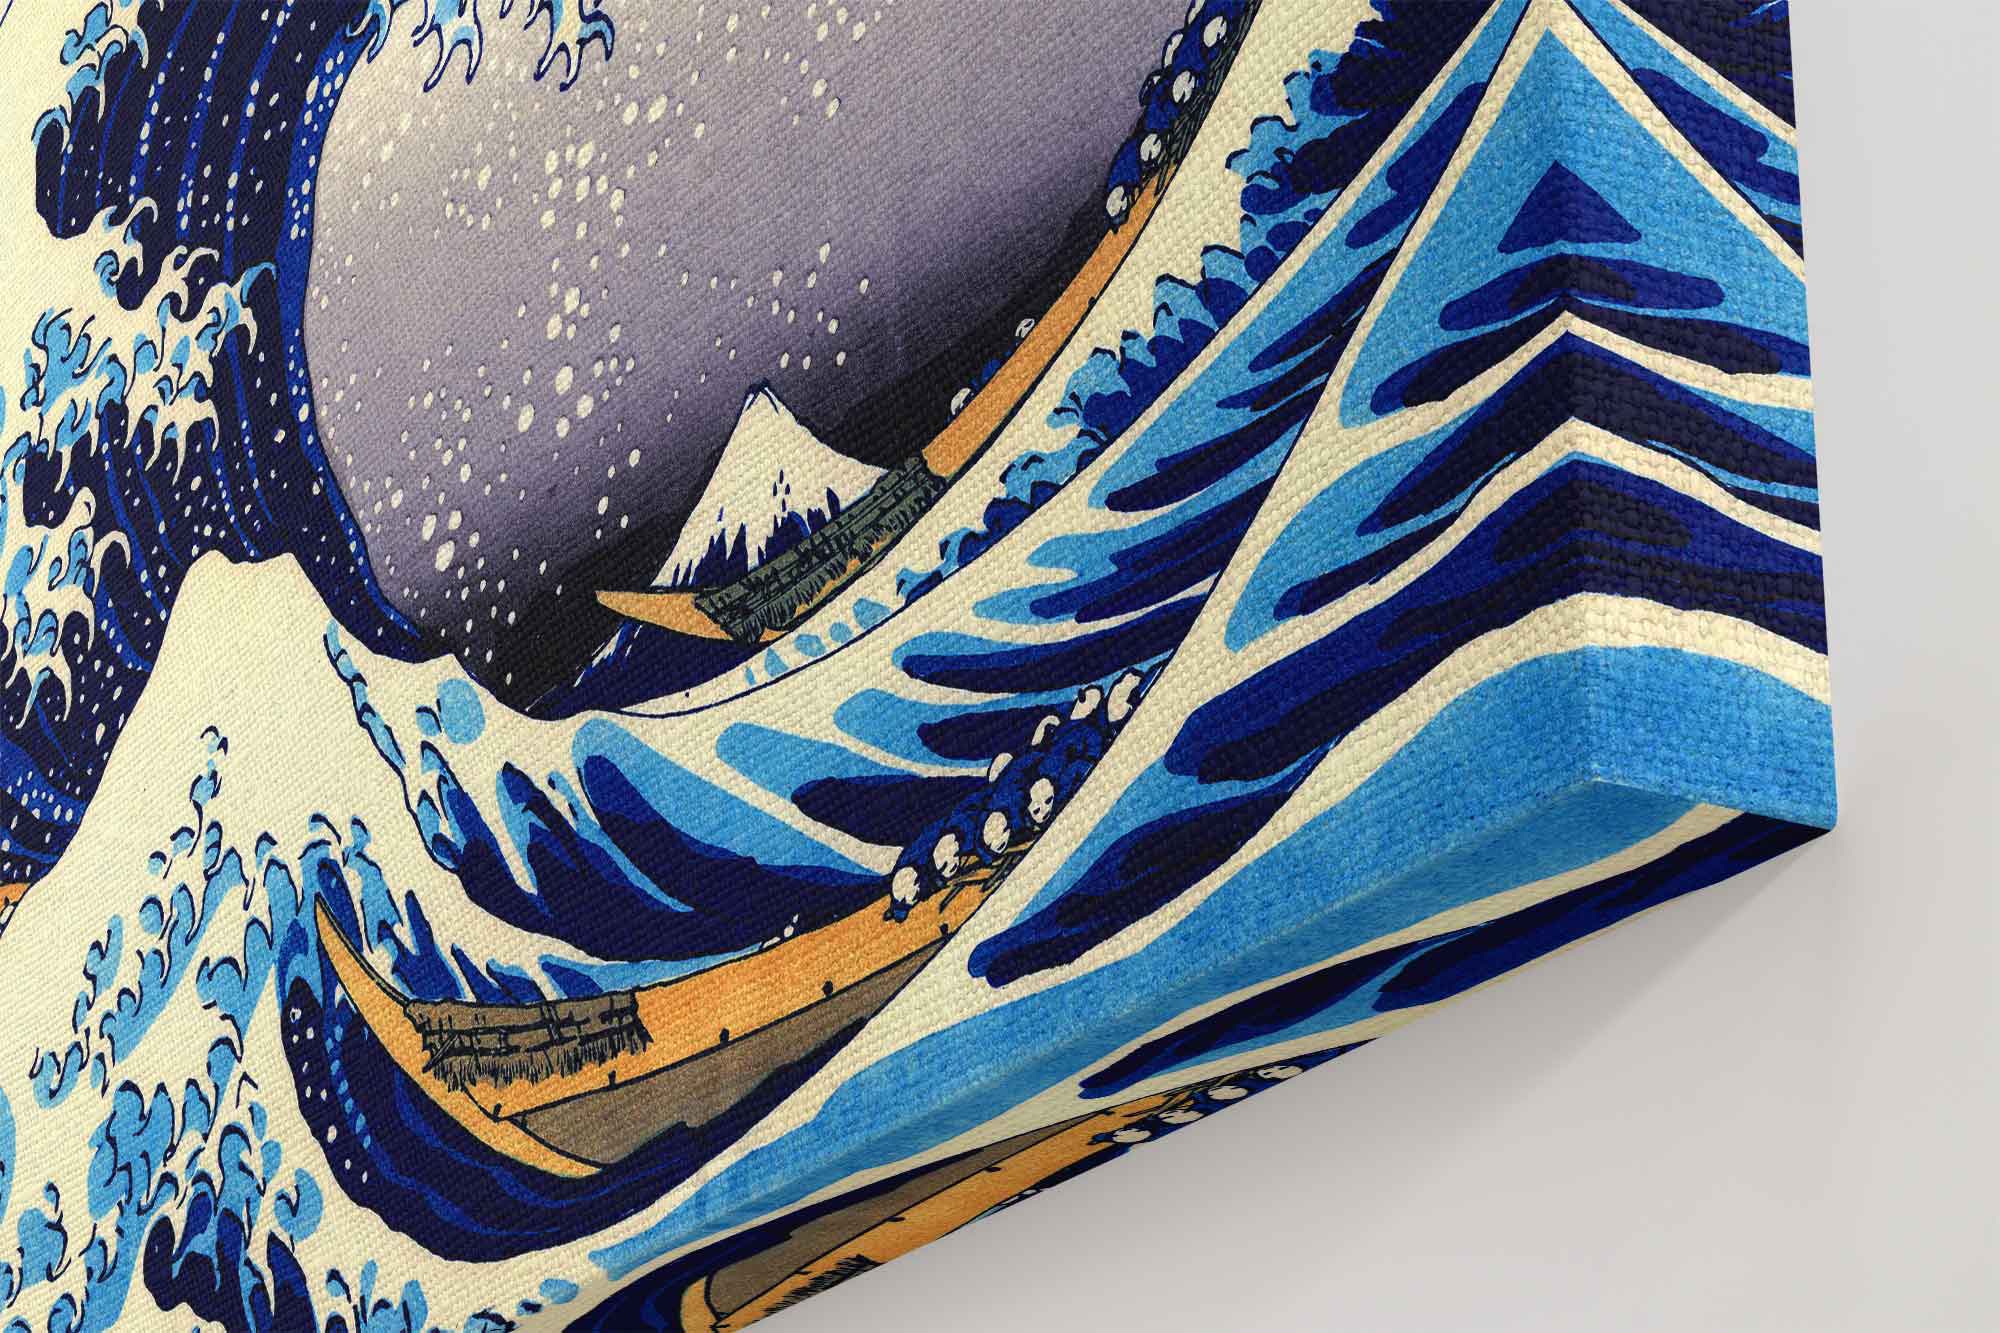 Great Wave Kanagawa Canvas Print, Katsushika Hokusai 1833 - Great Wave Kanagawa Print - WallArtPrints4U